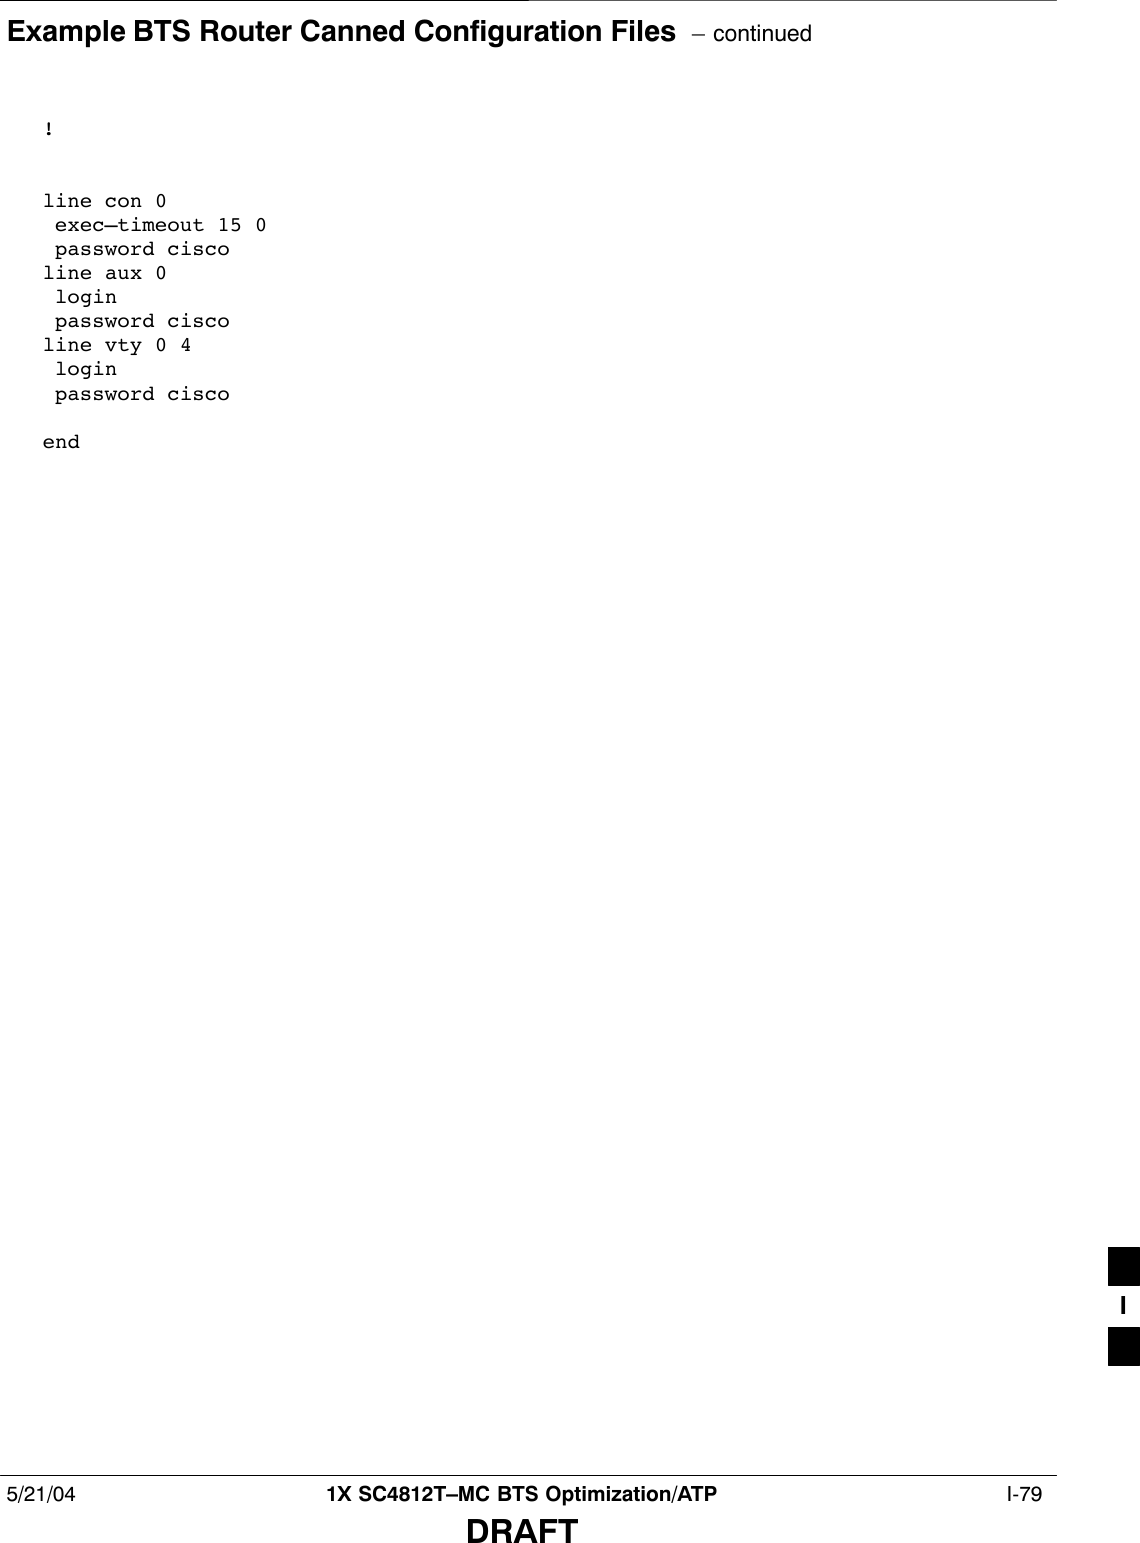 Example BTS Router Canned Configuration Files  – continued5/21/04 1X SC4812T–MC BTS Optimization/ATP  I-79DRAFT!line con 0 exec–timeout 15 0 password ciscoline aux 0 login  password ciscoline vty 0 4 login  password ciscoendI